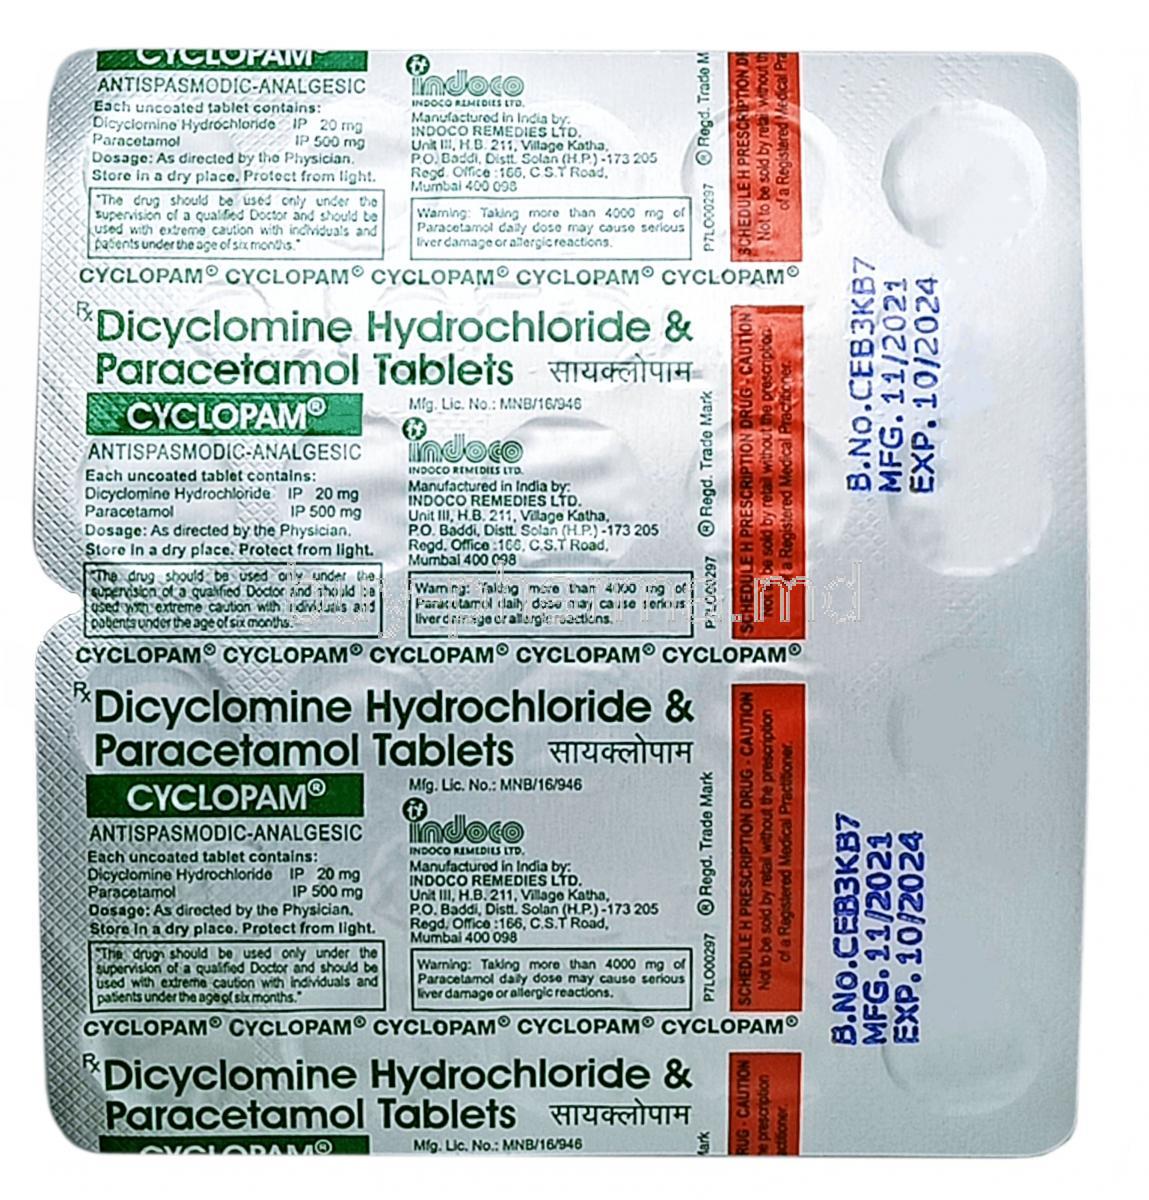 Cyclopam, Dicyclomine 20mg, Paracetamol 500mg, Indoco Remedies, Blisterpack information